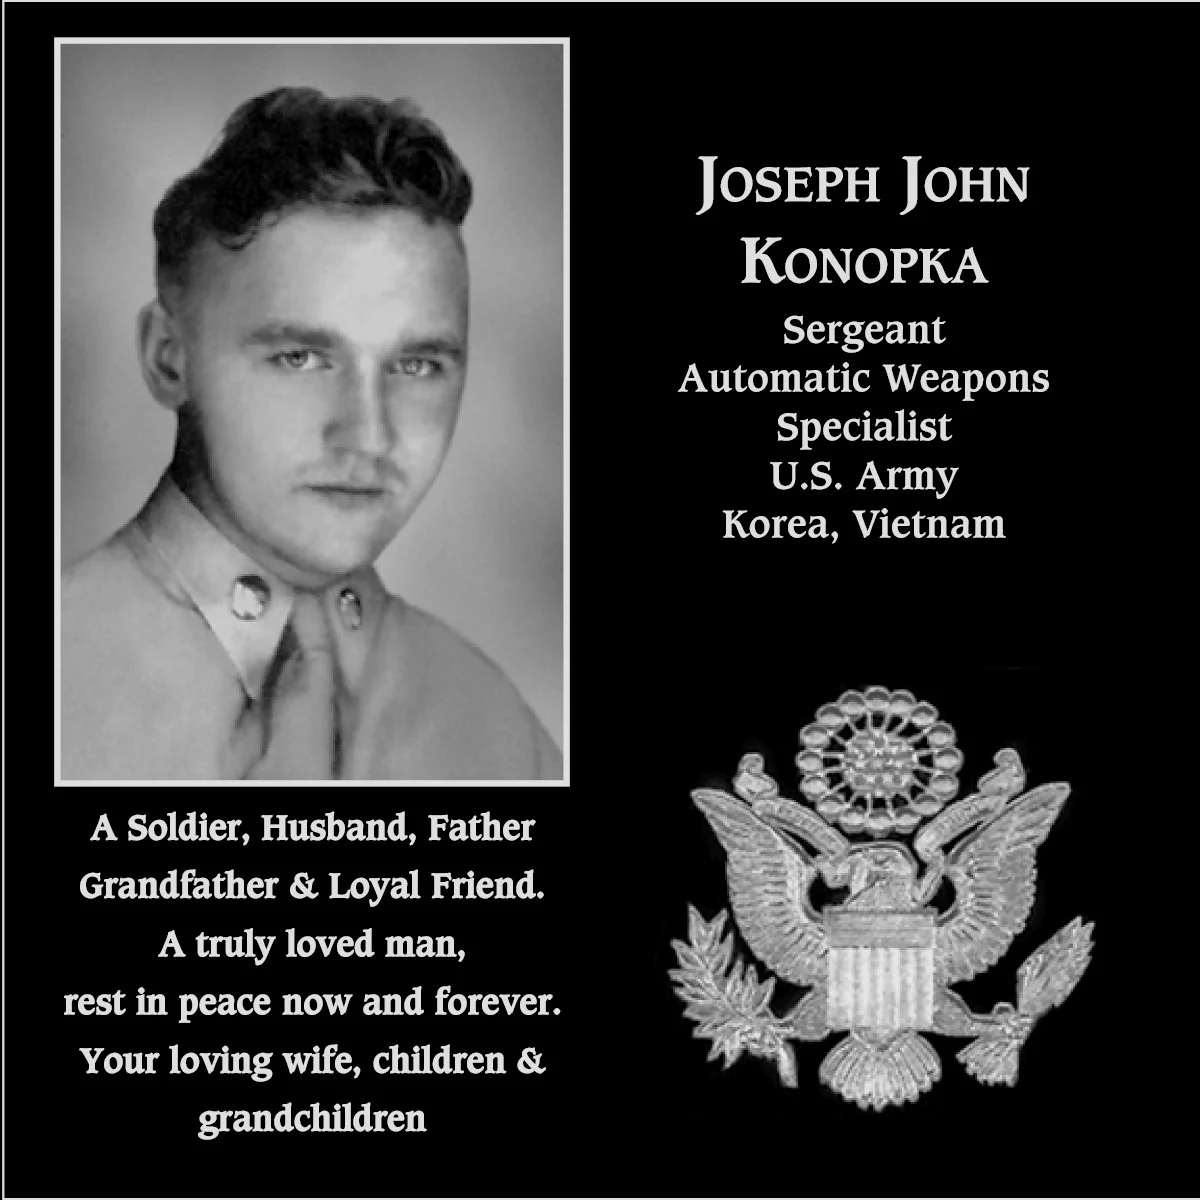 Joseph John Konopka